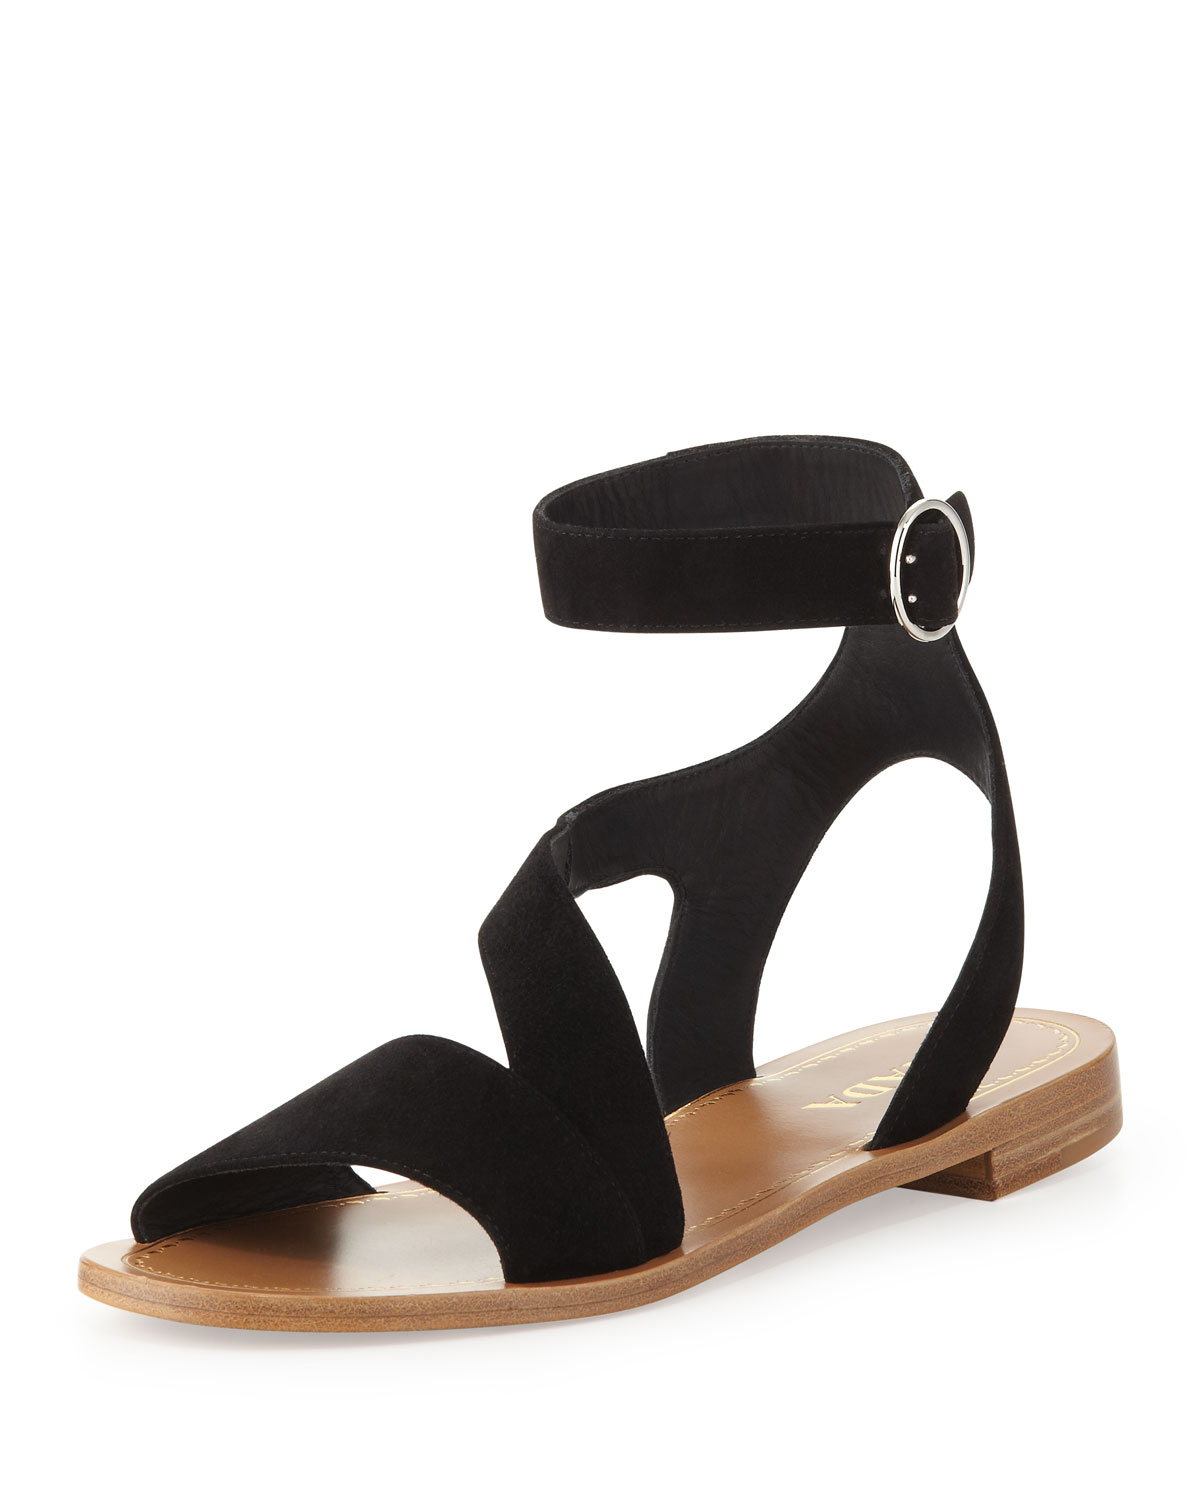 Prada Suede Ankle-Wrap Sandal in Black | Lyst